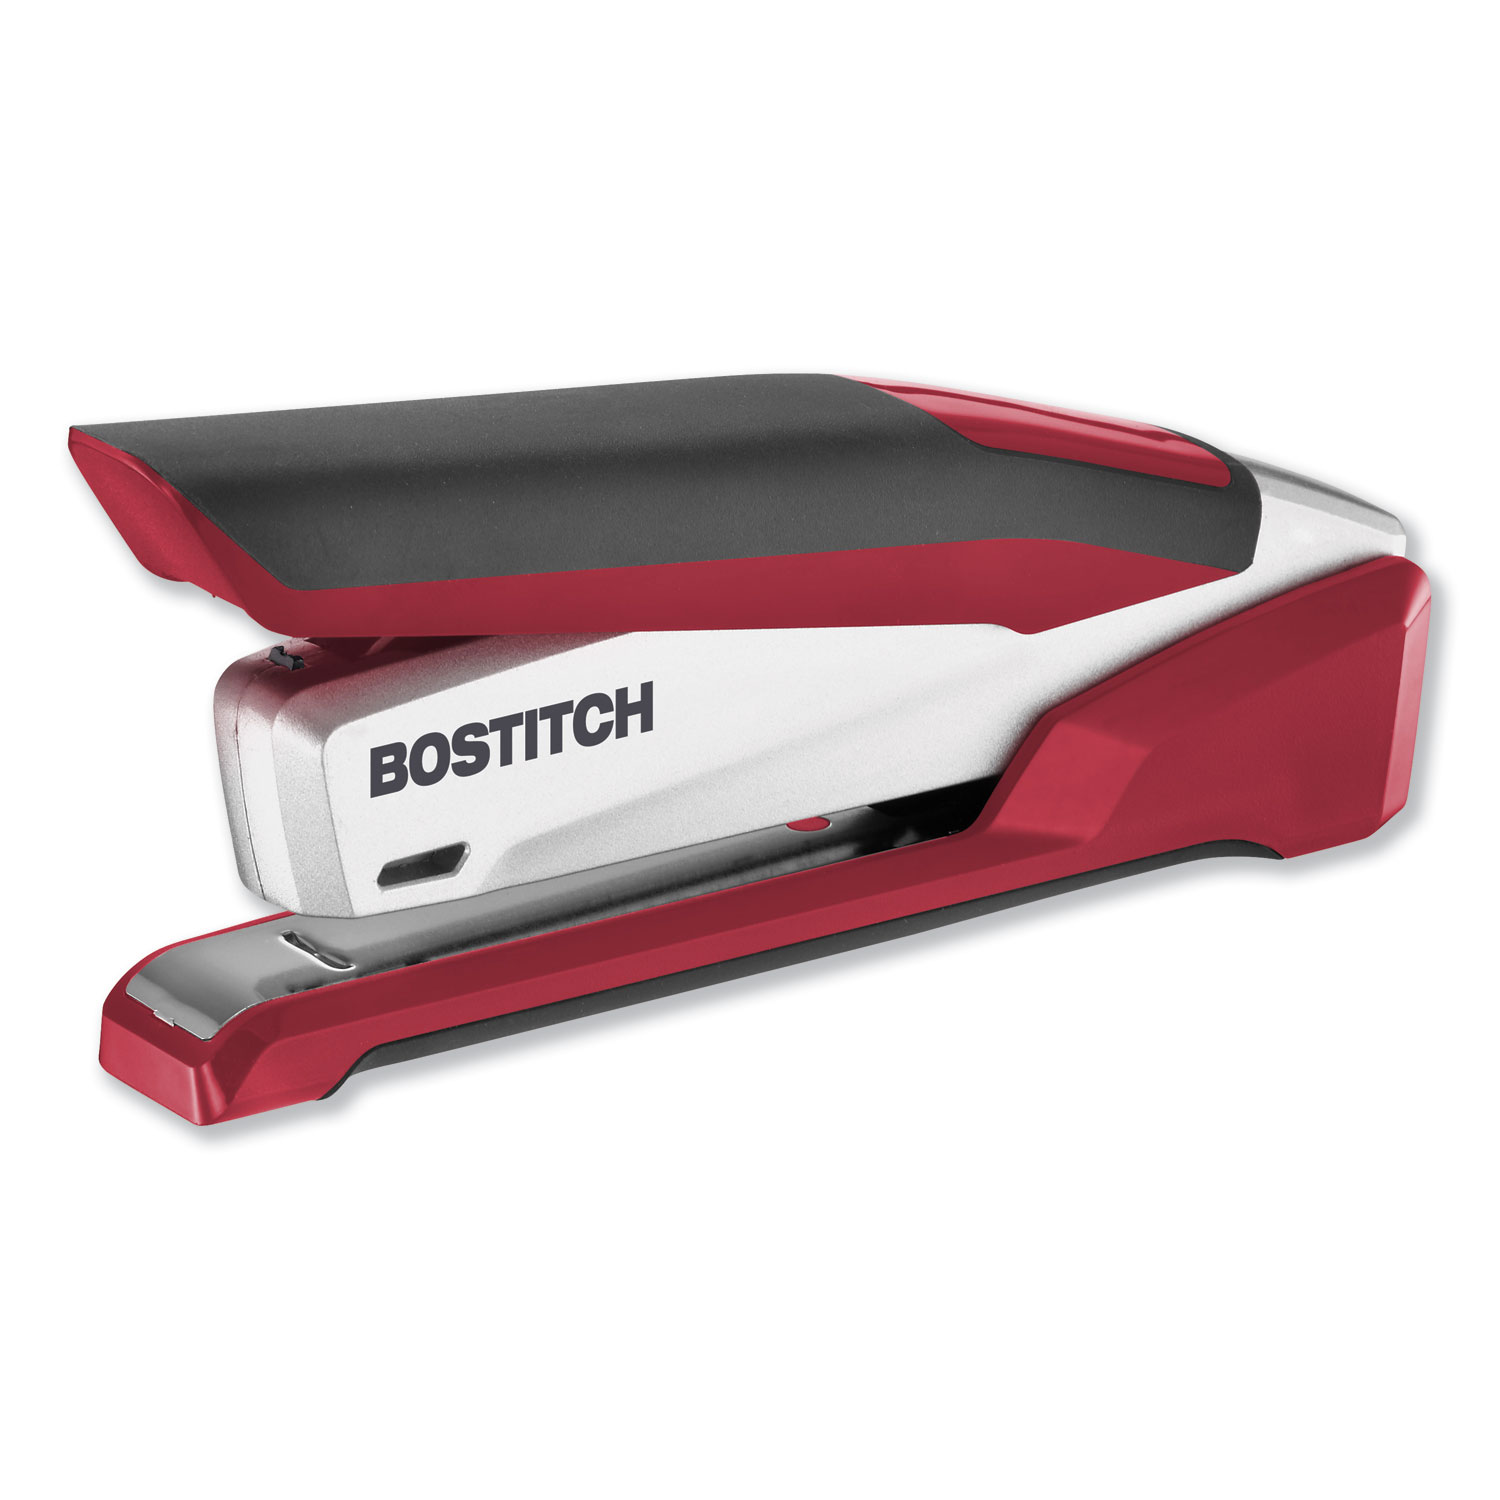  Bostitch 1117 InPower Spring-Powered Premium Desktop Stapler, 28-Sheet Capacity, Red/Silver (ACI1117) 